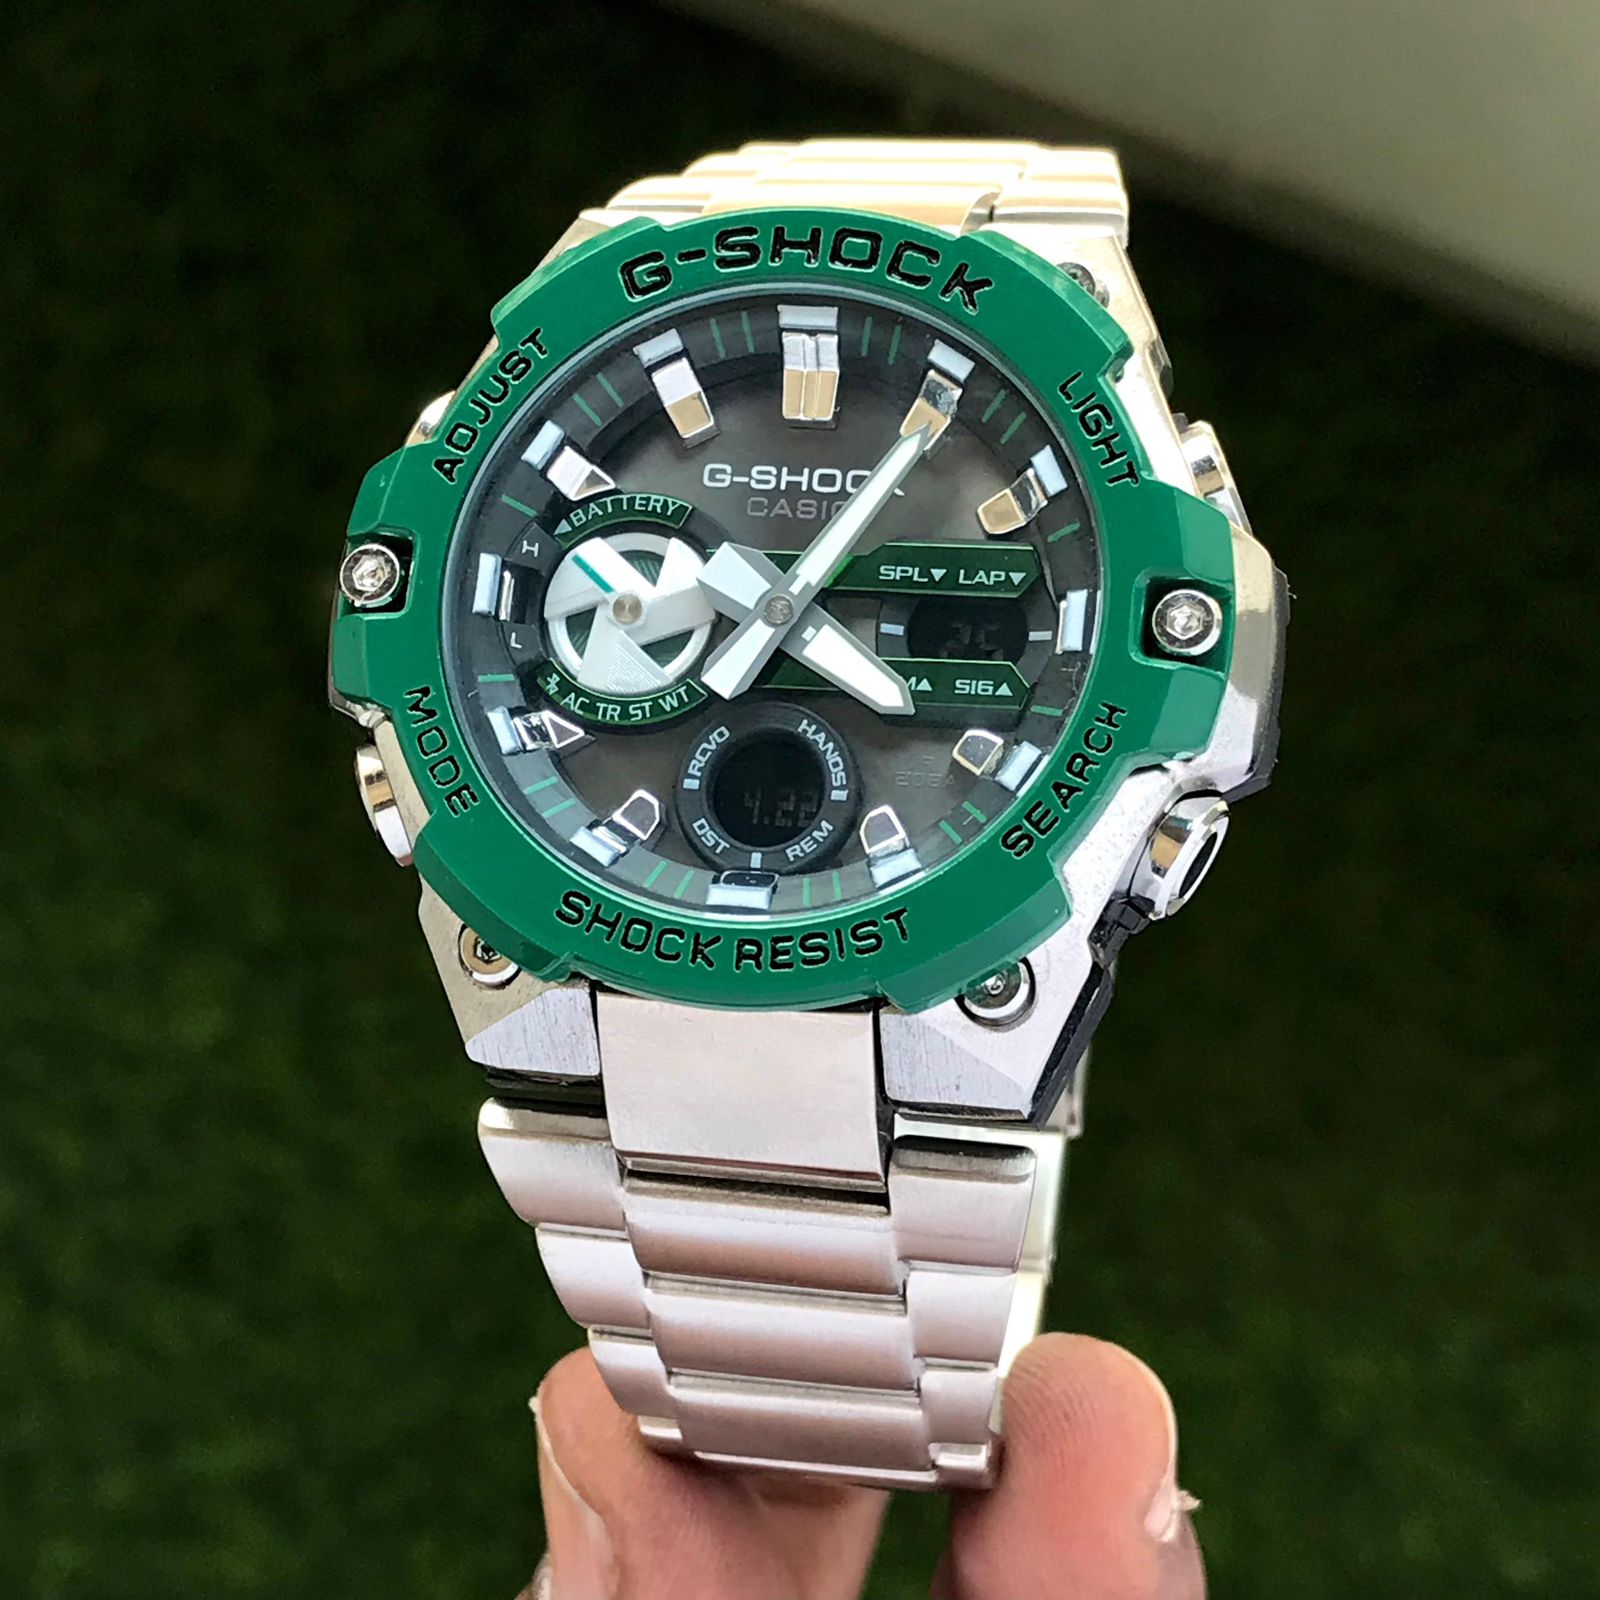 Cg Premium quality Luxury Watch - AmazingBaba